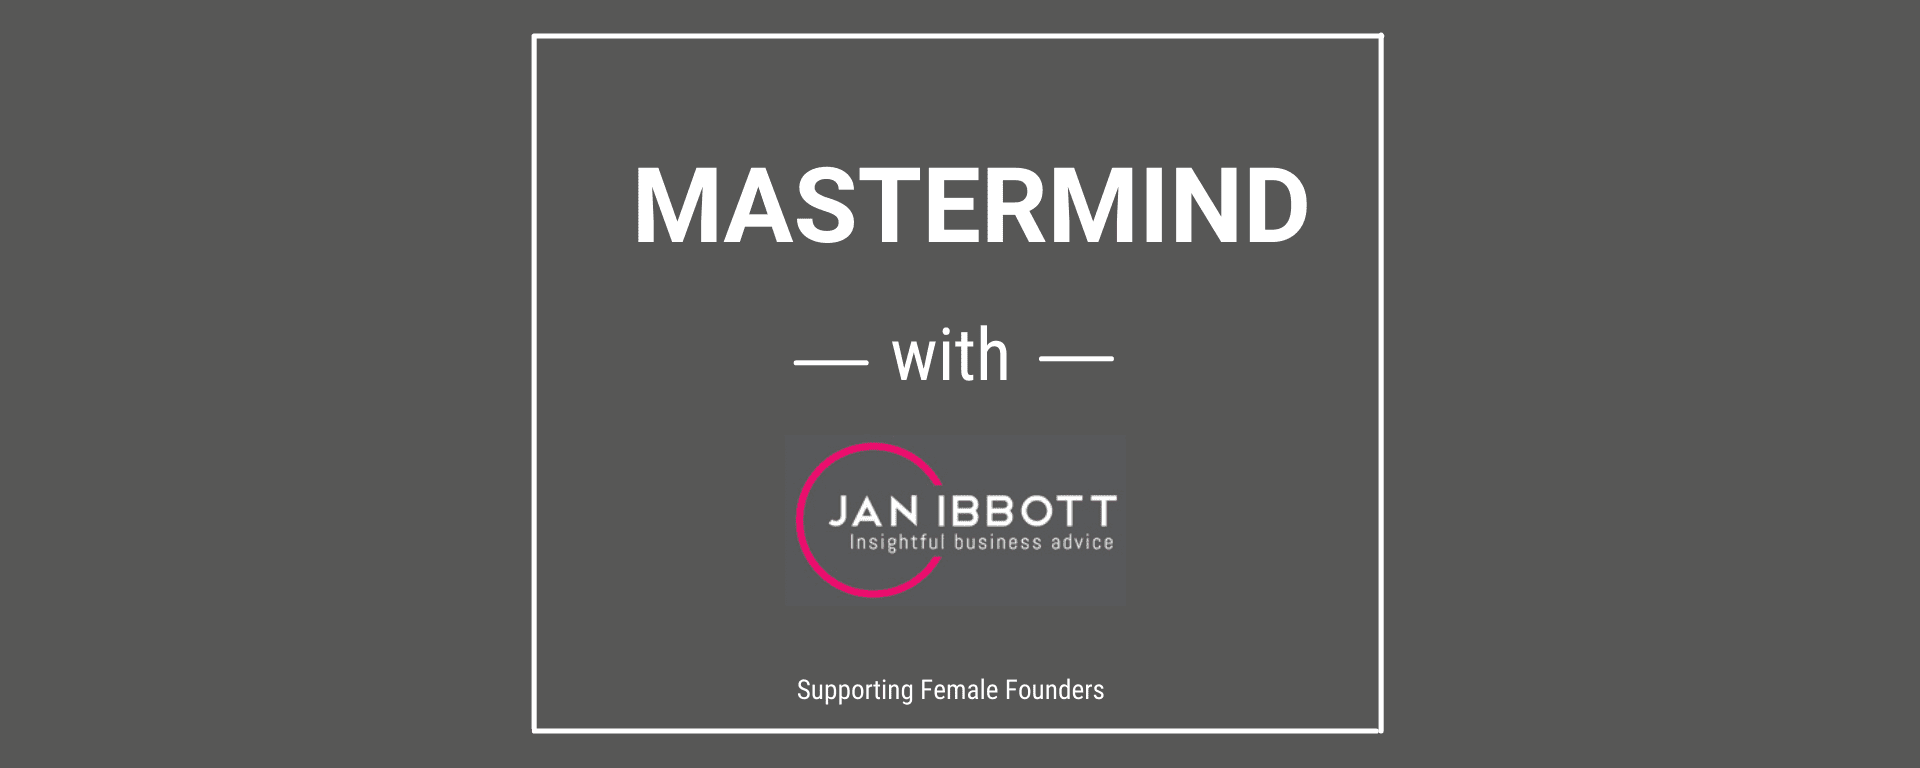 Mastermind with Jan Ibbott